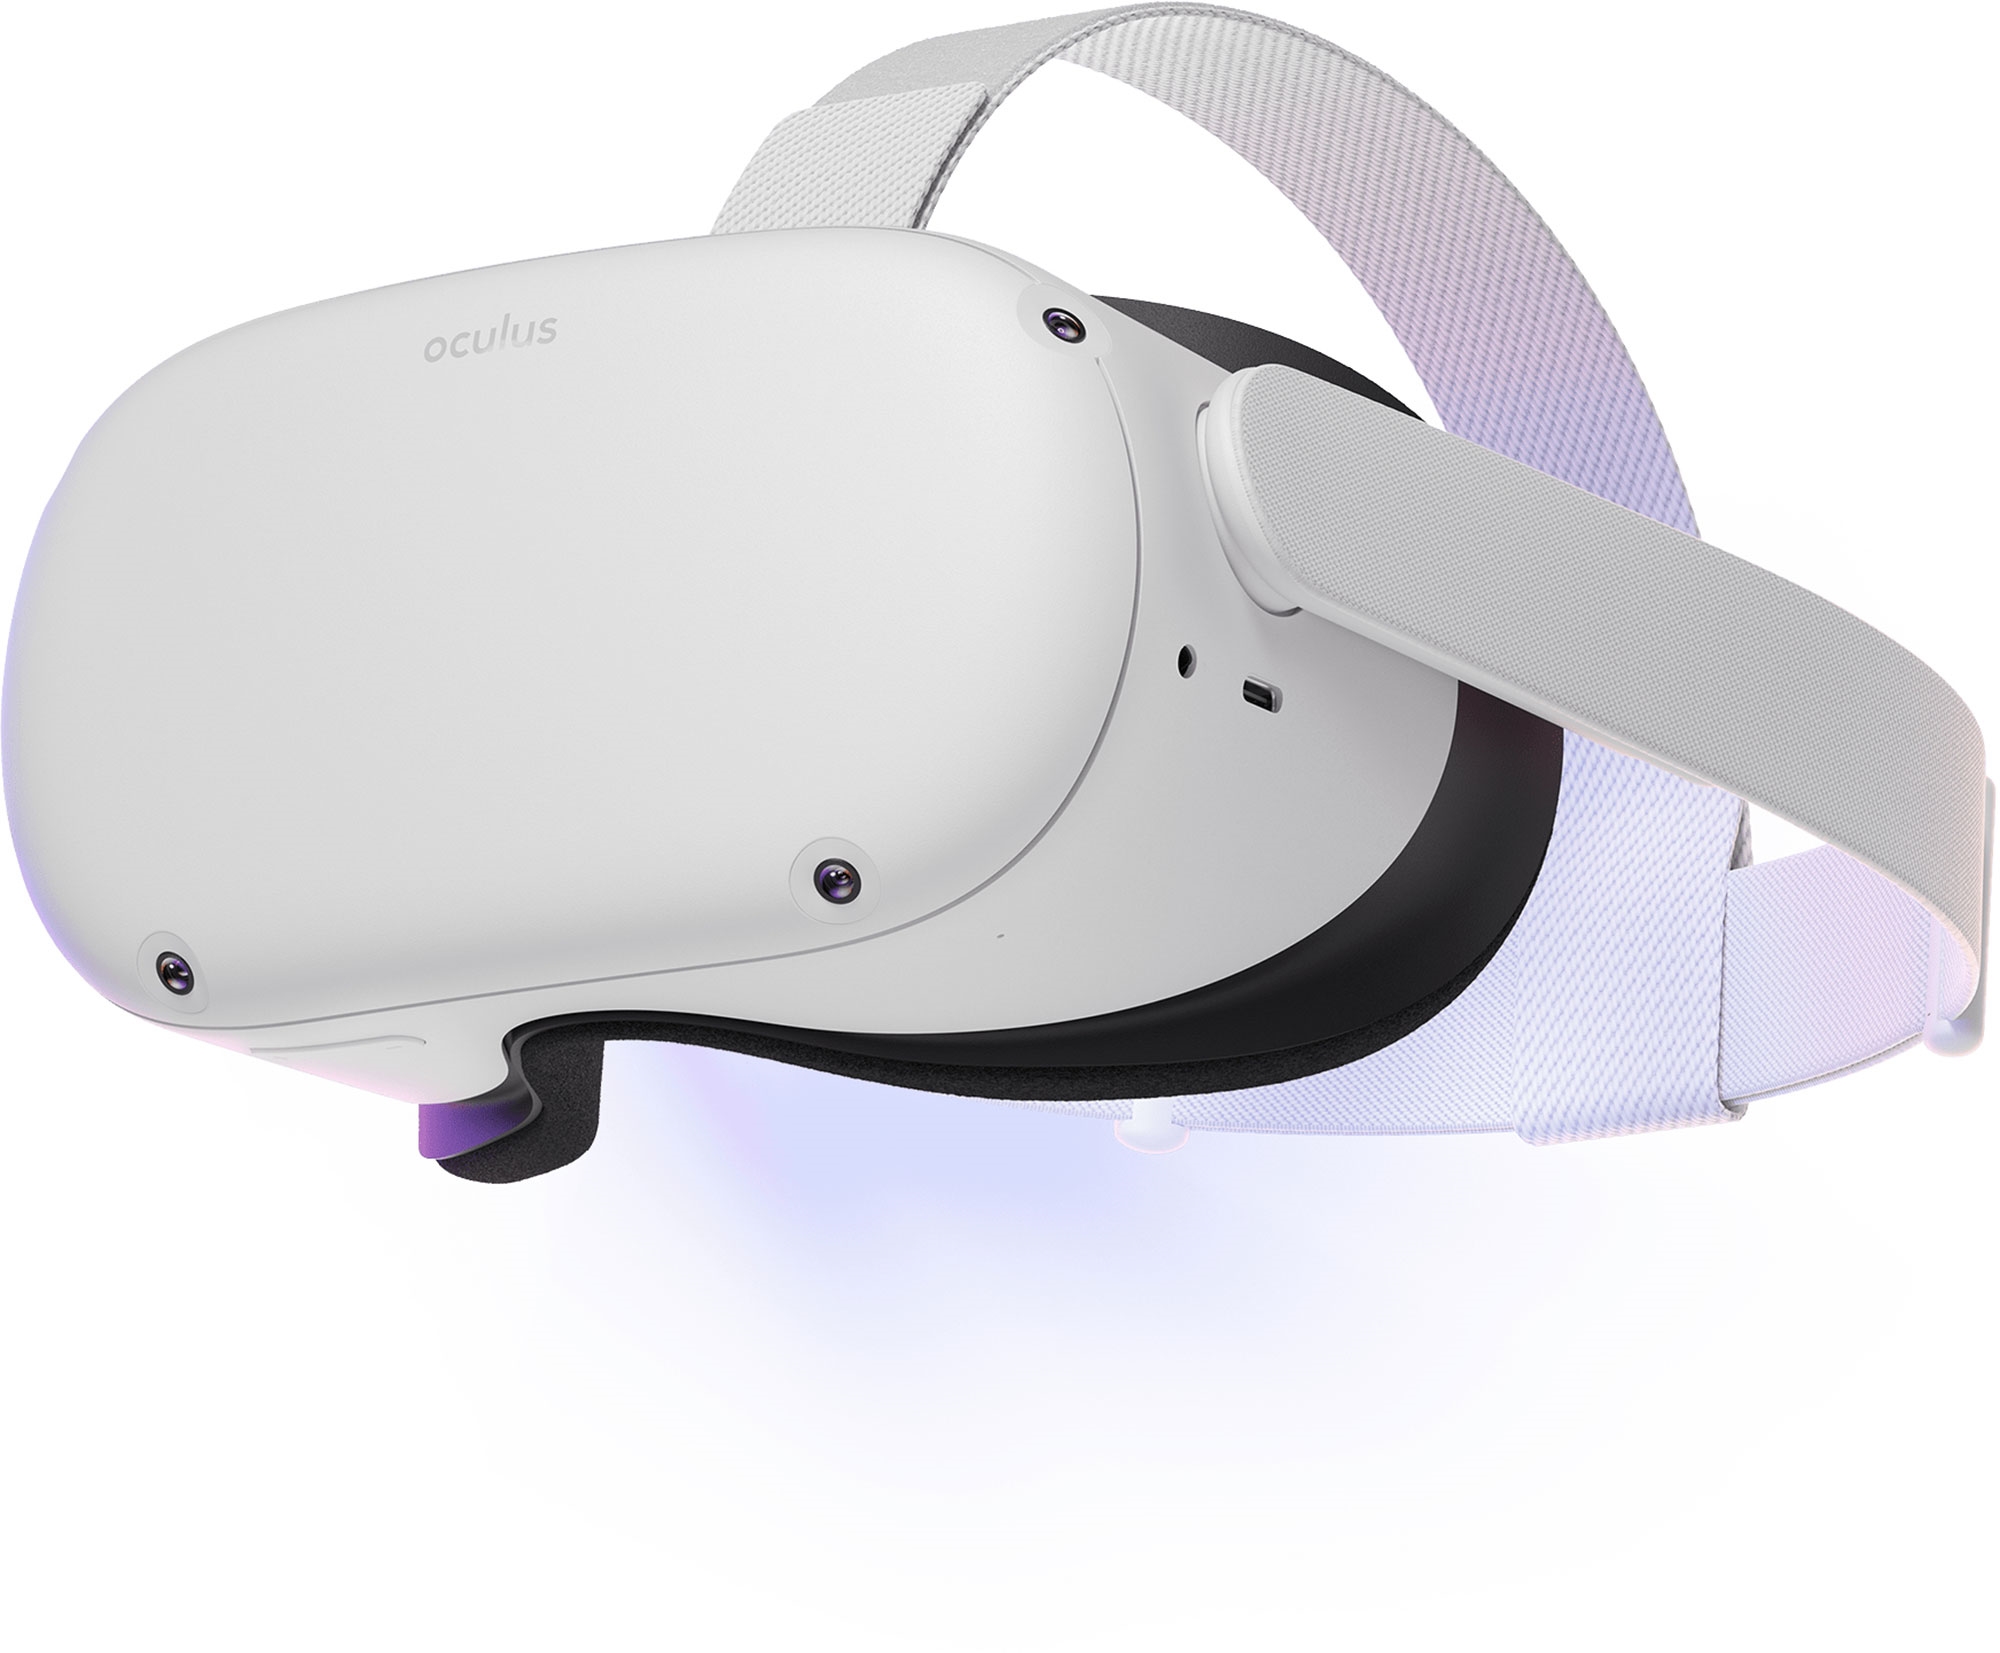 Quest 2 VR-briller - Returvare